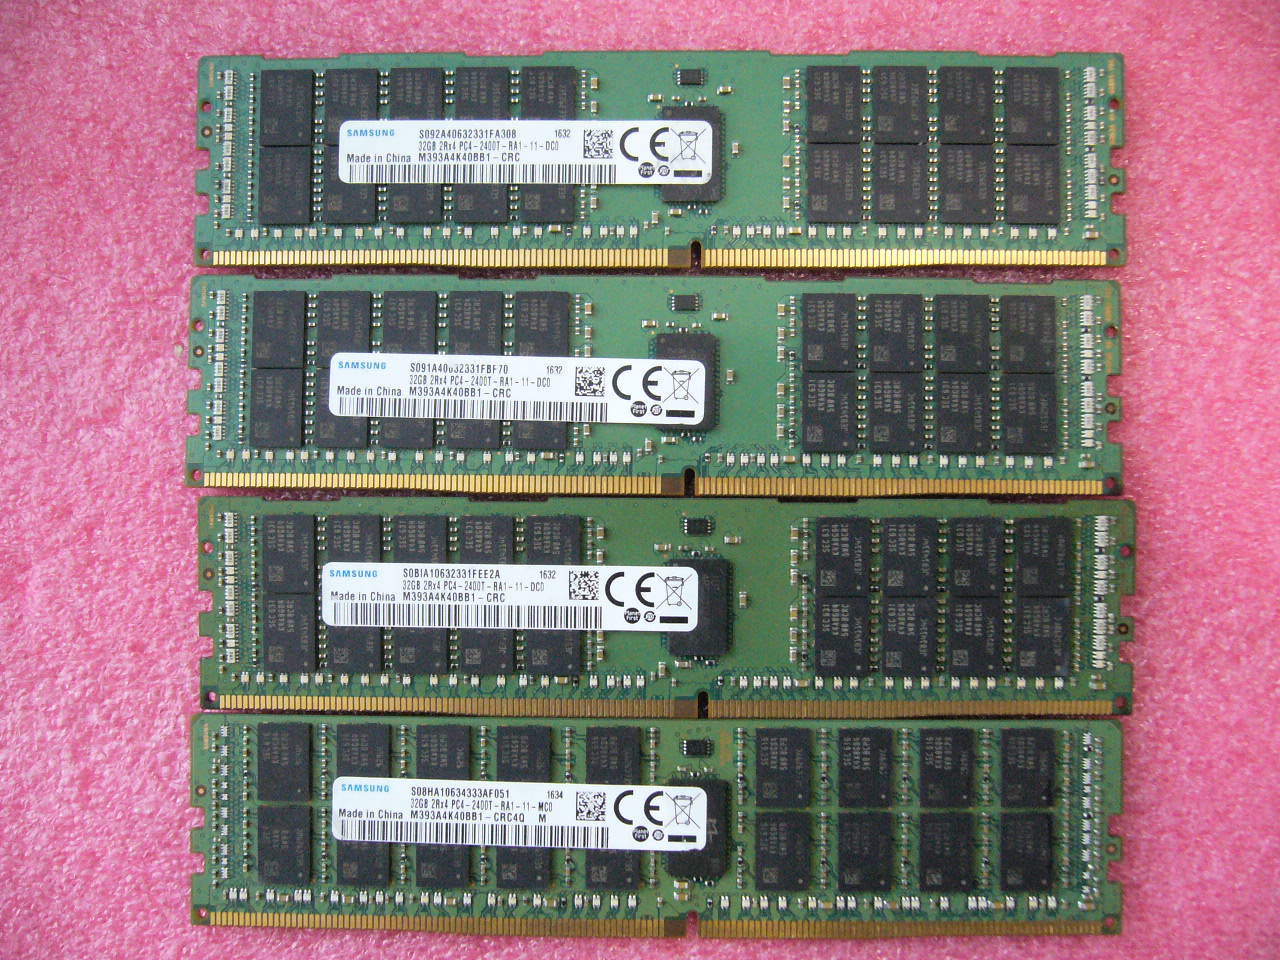 QTY 1x 32GB DDR4 2Rx4 PC4-2400T-RA1 ECC Registered memory Samsung M393A4K40BB1 - Click Image to Close